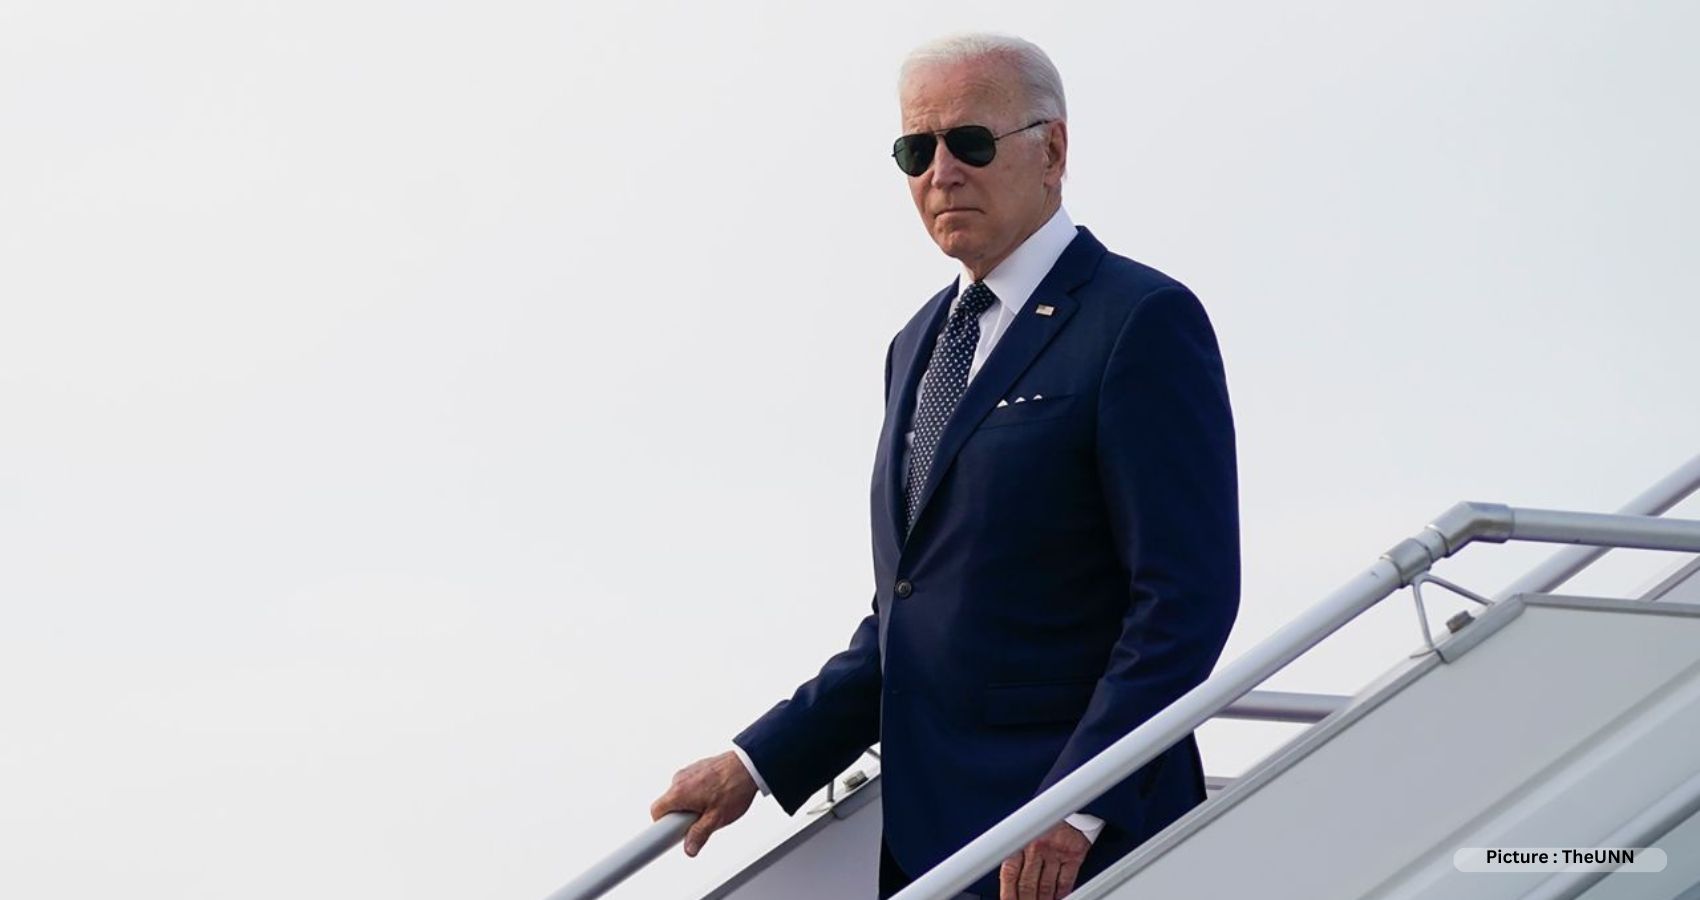 President Biden’s Age Emerges as Major Hurdle for Re-election Bid